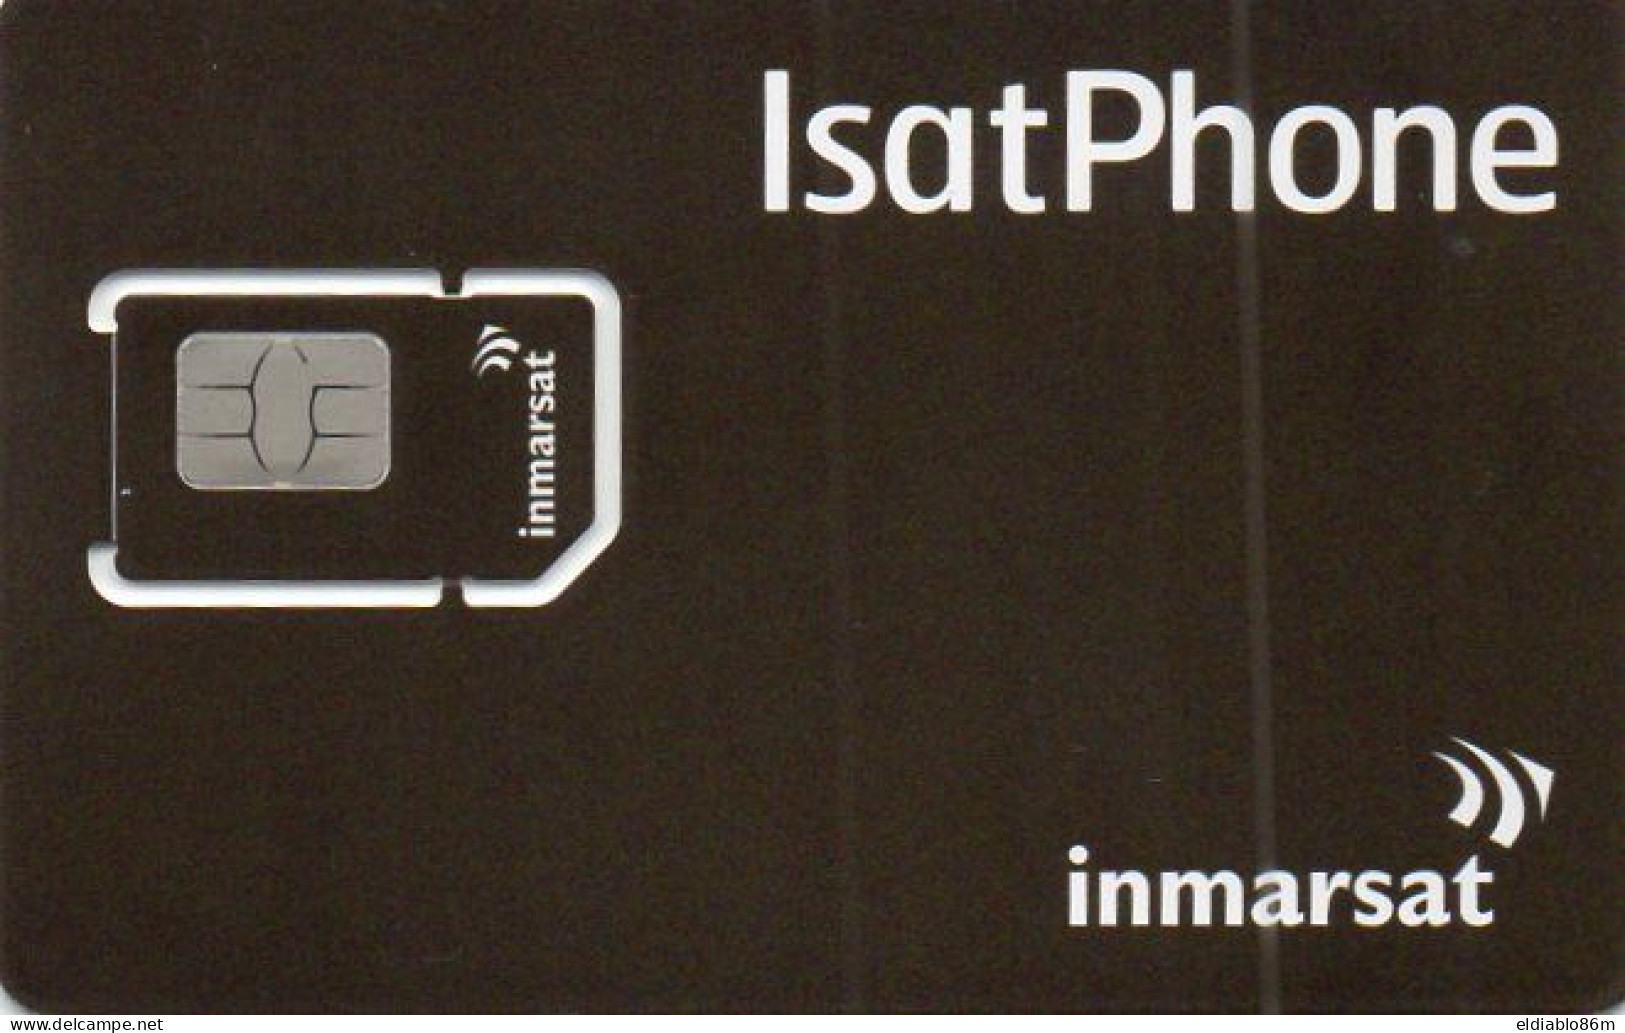 GSM CARD - SATELLITE CARD - INMARSAT - ISATPHONE - MINT - Origen Desconocido